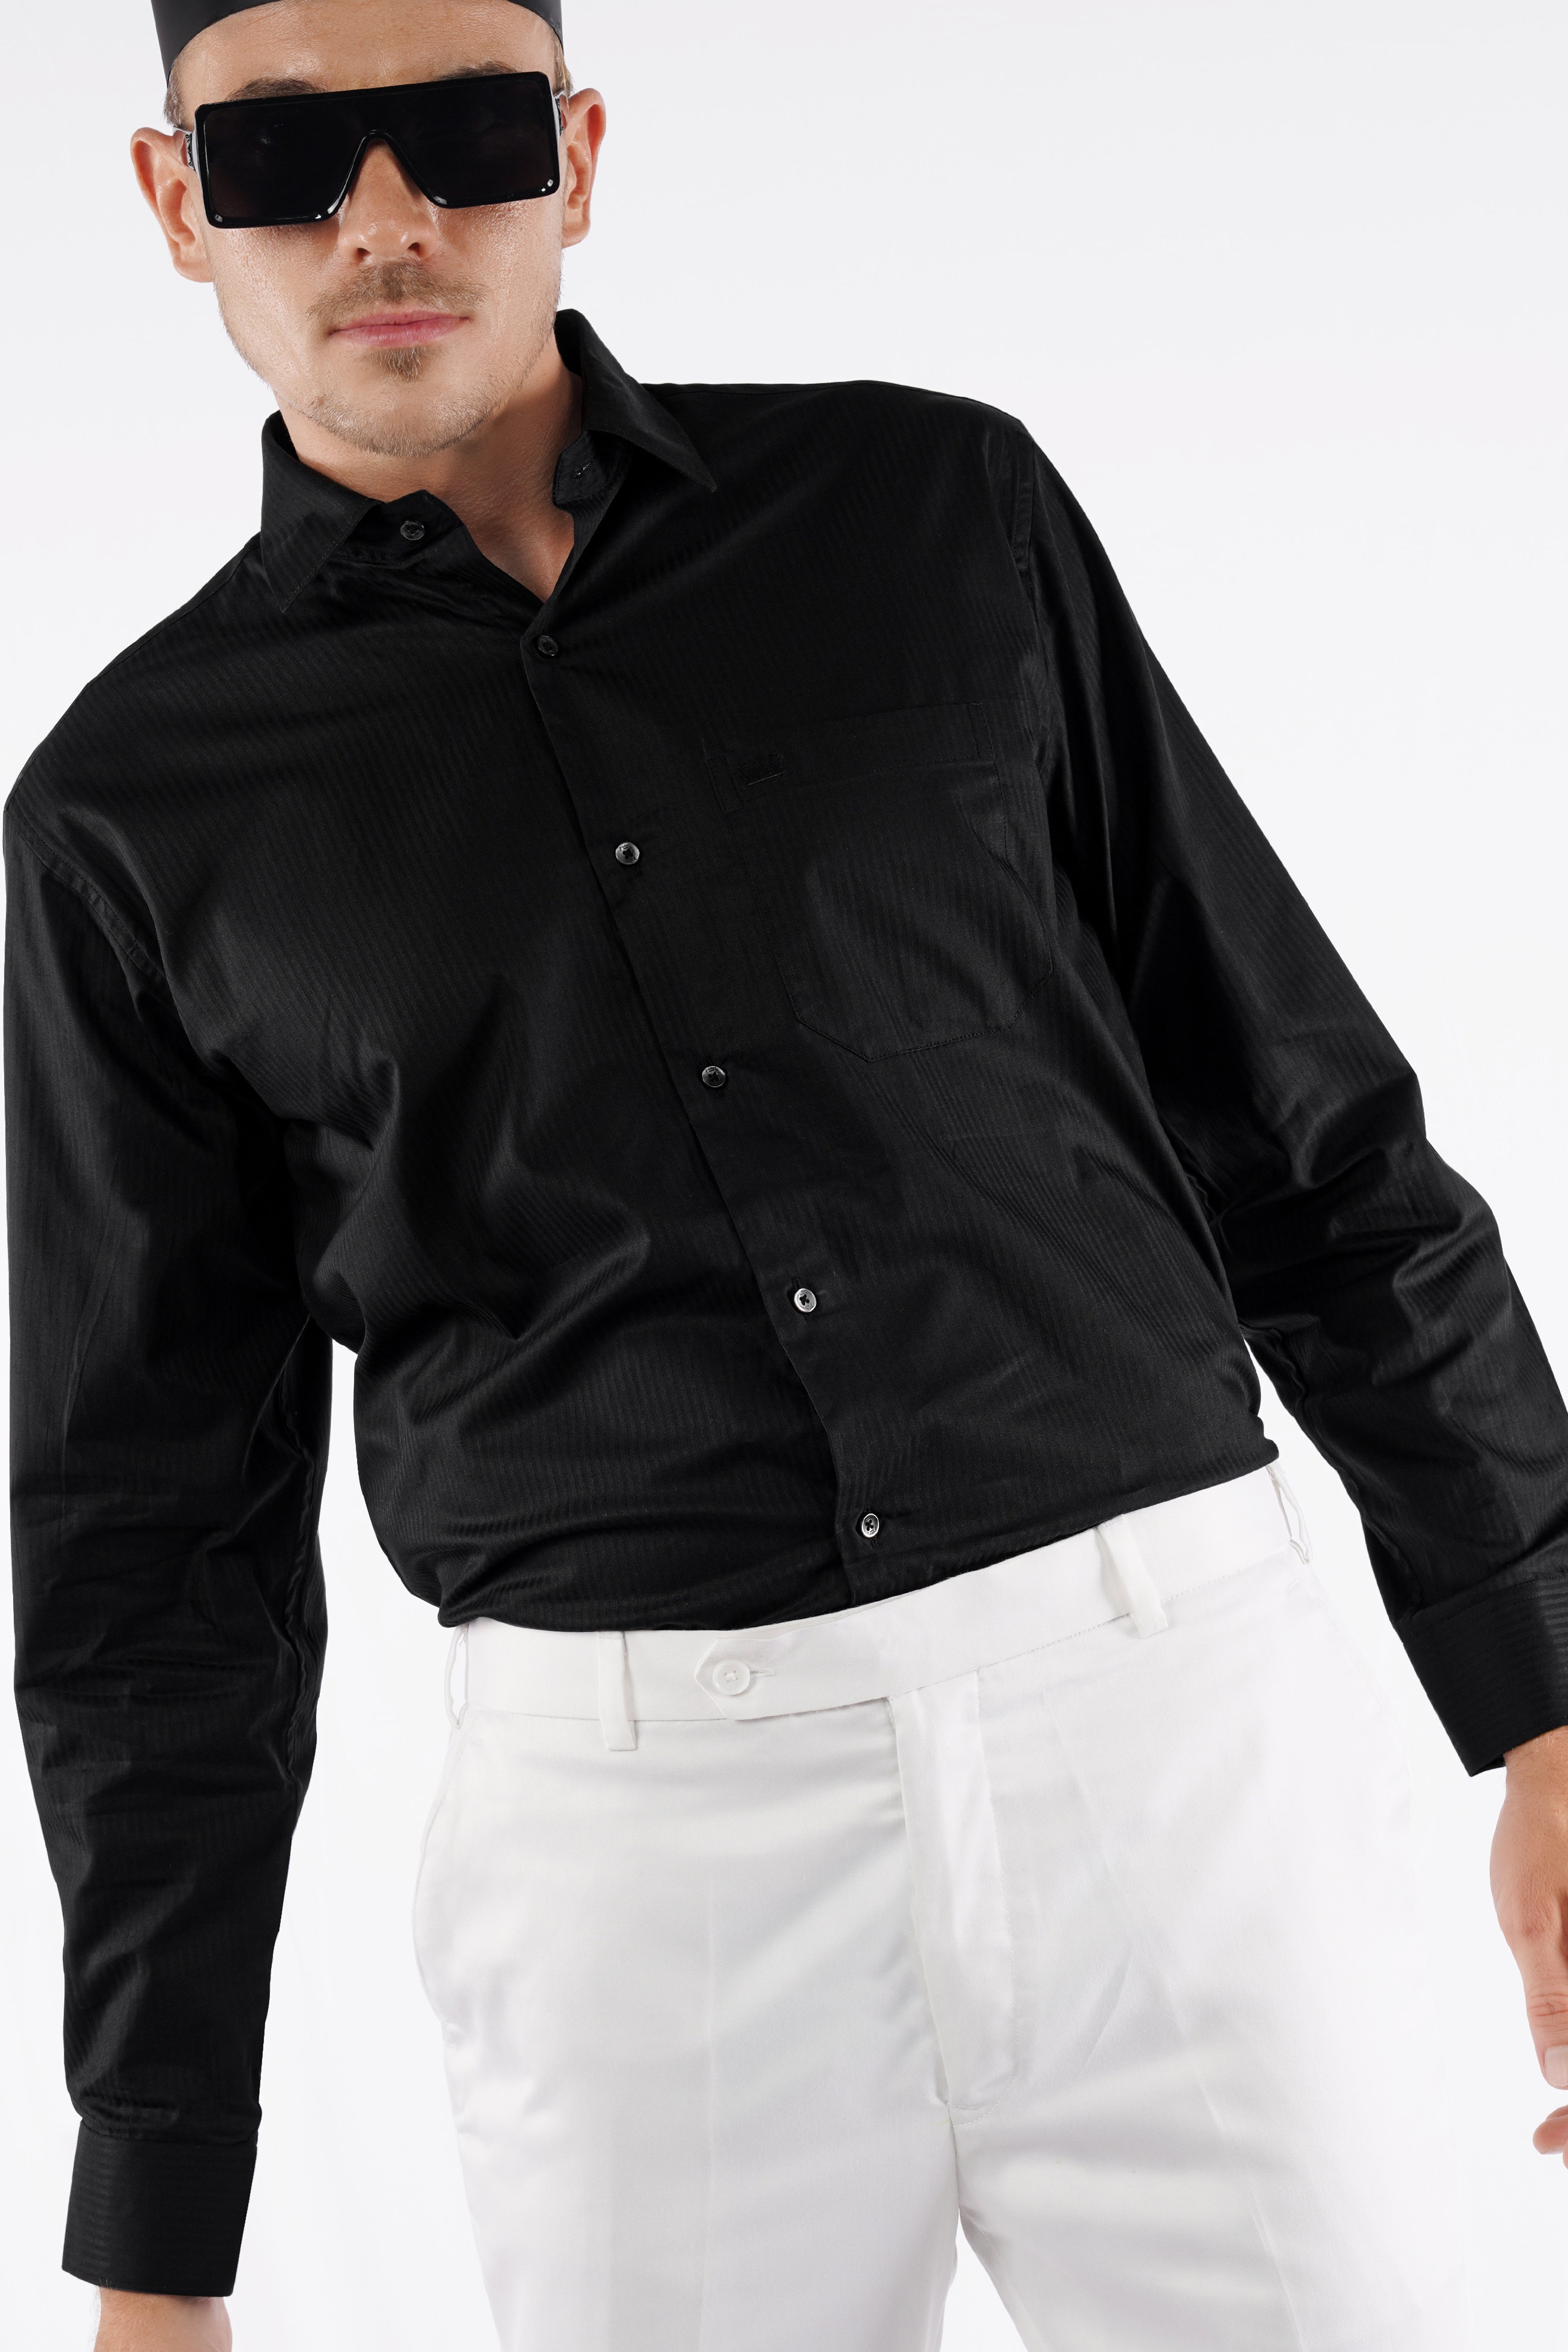 Jade Black Twill Premium Cotton Shirt